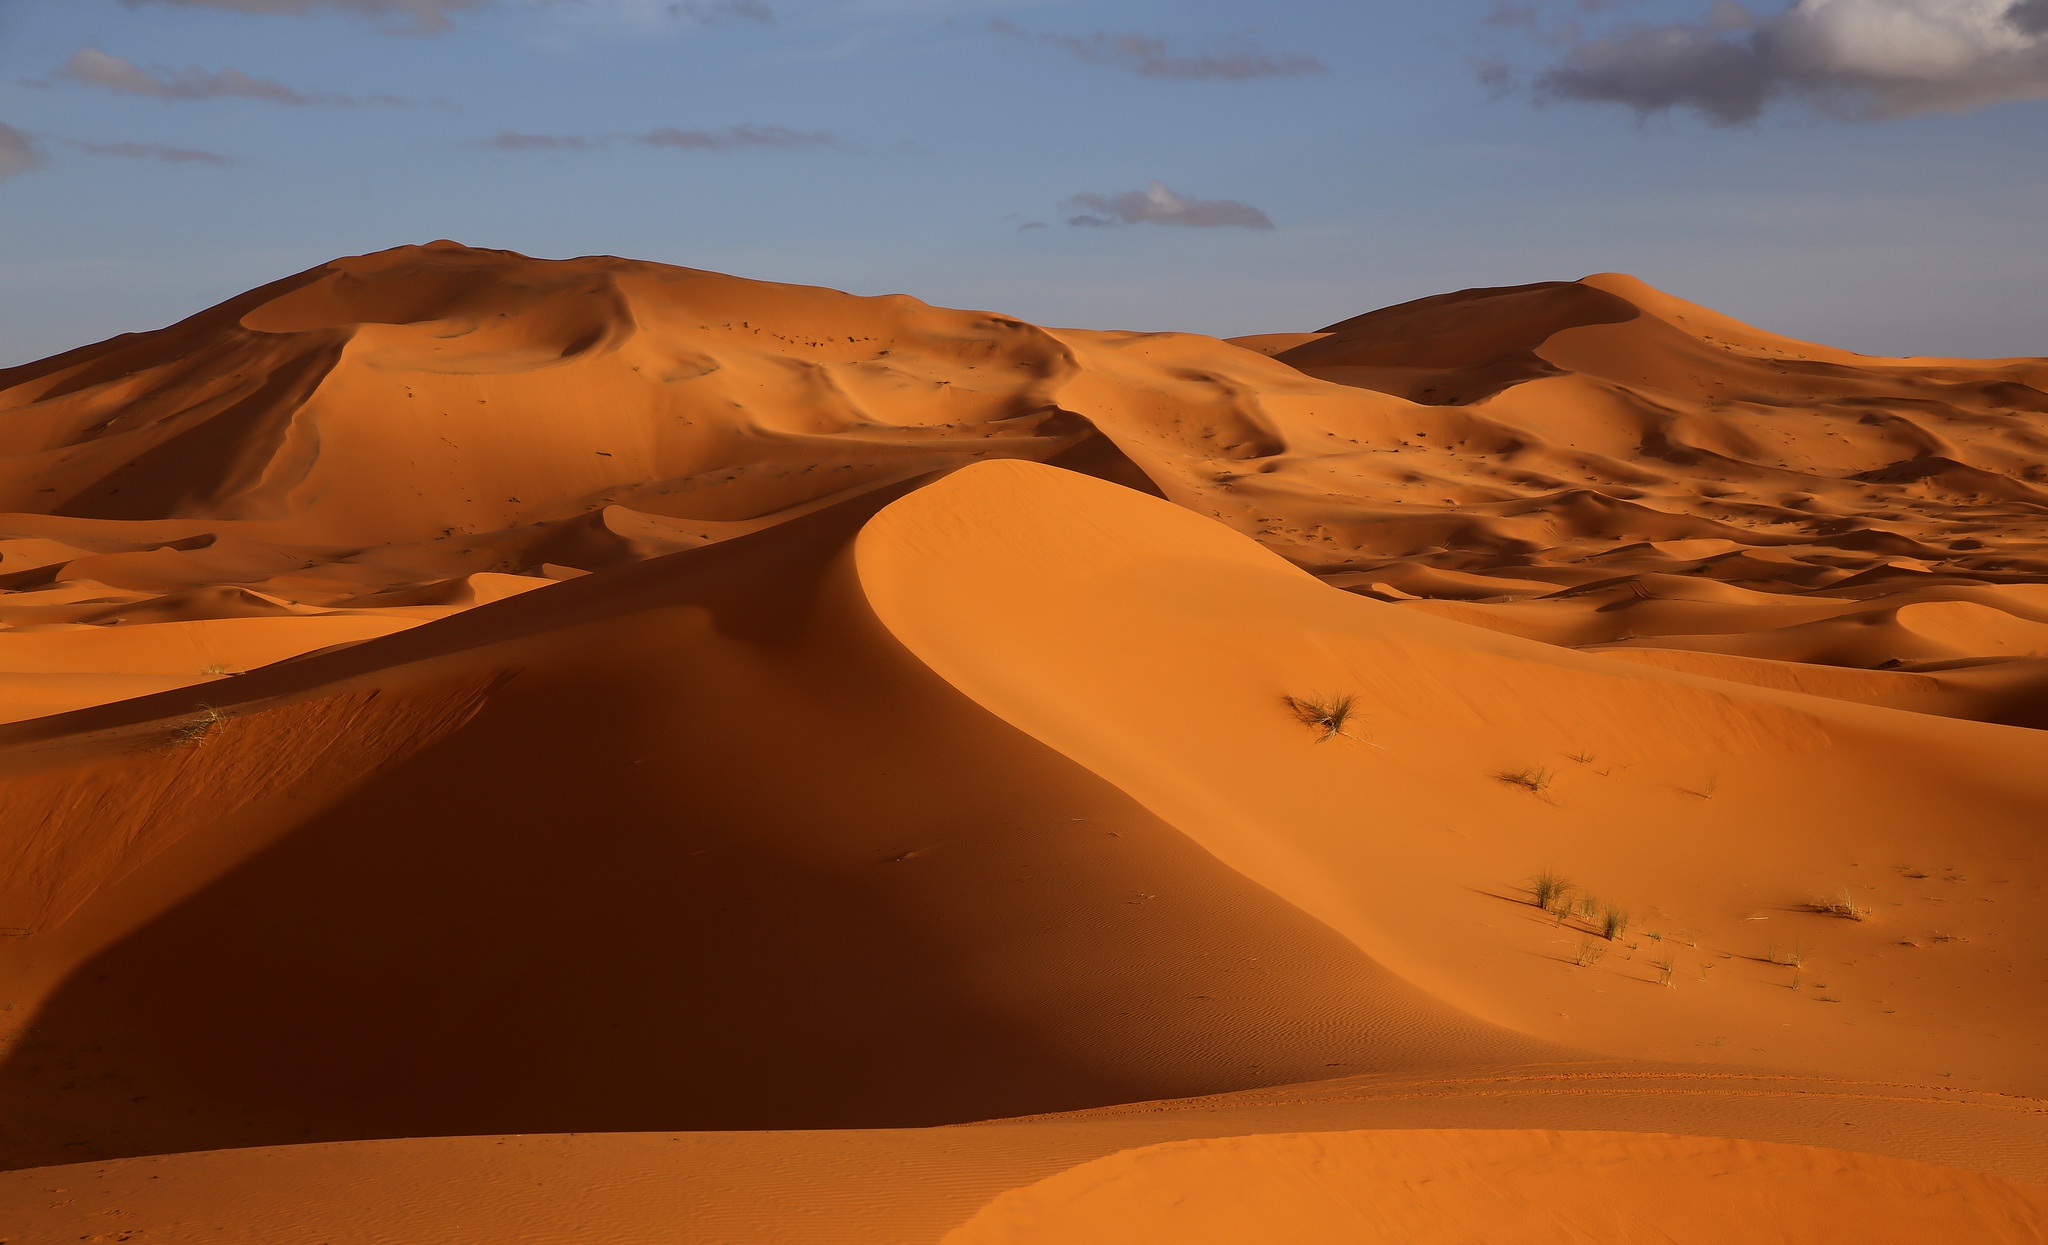  Desert HQ Background Images